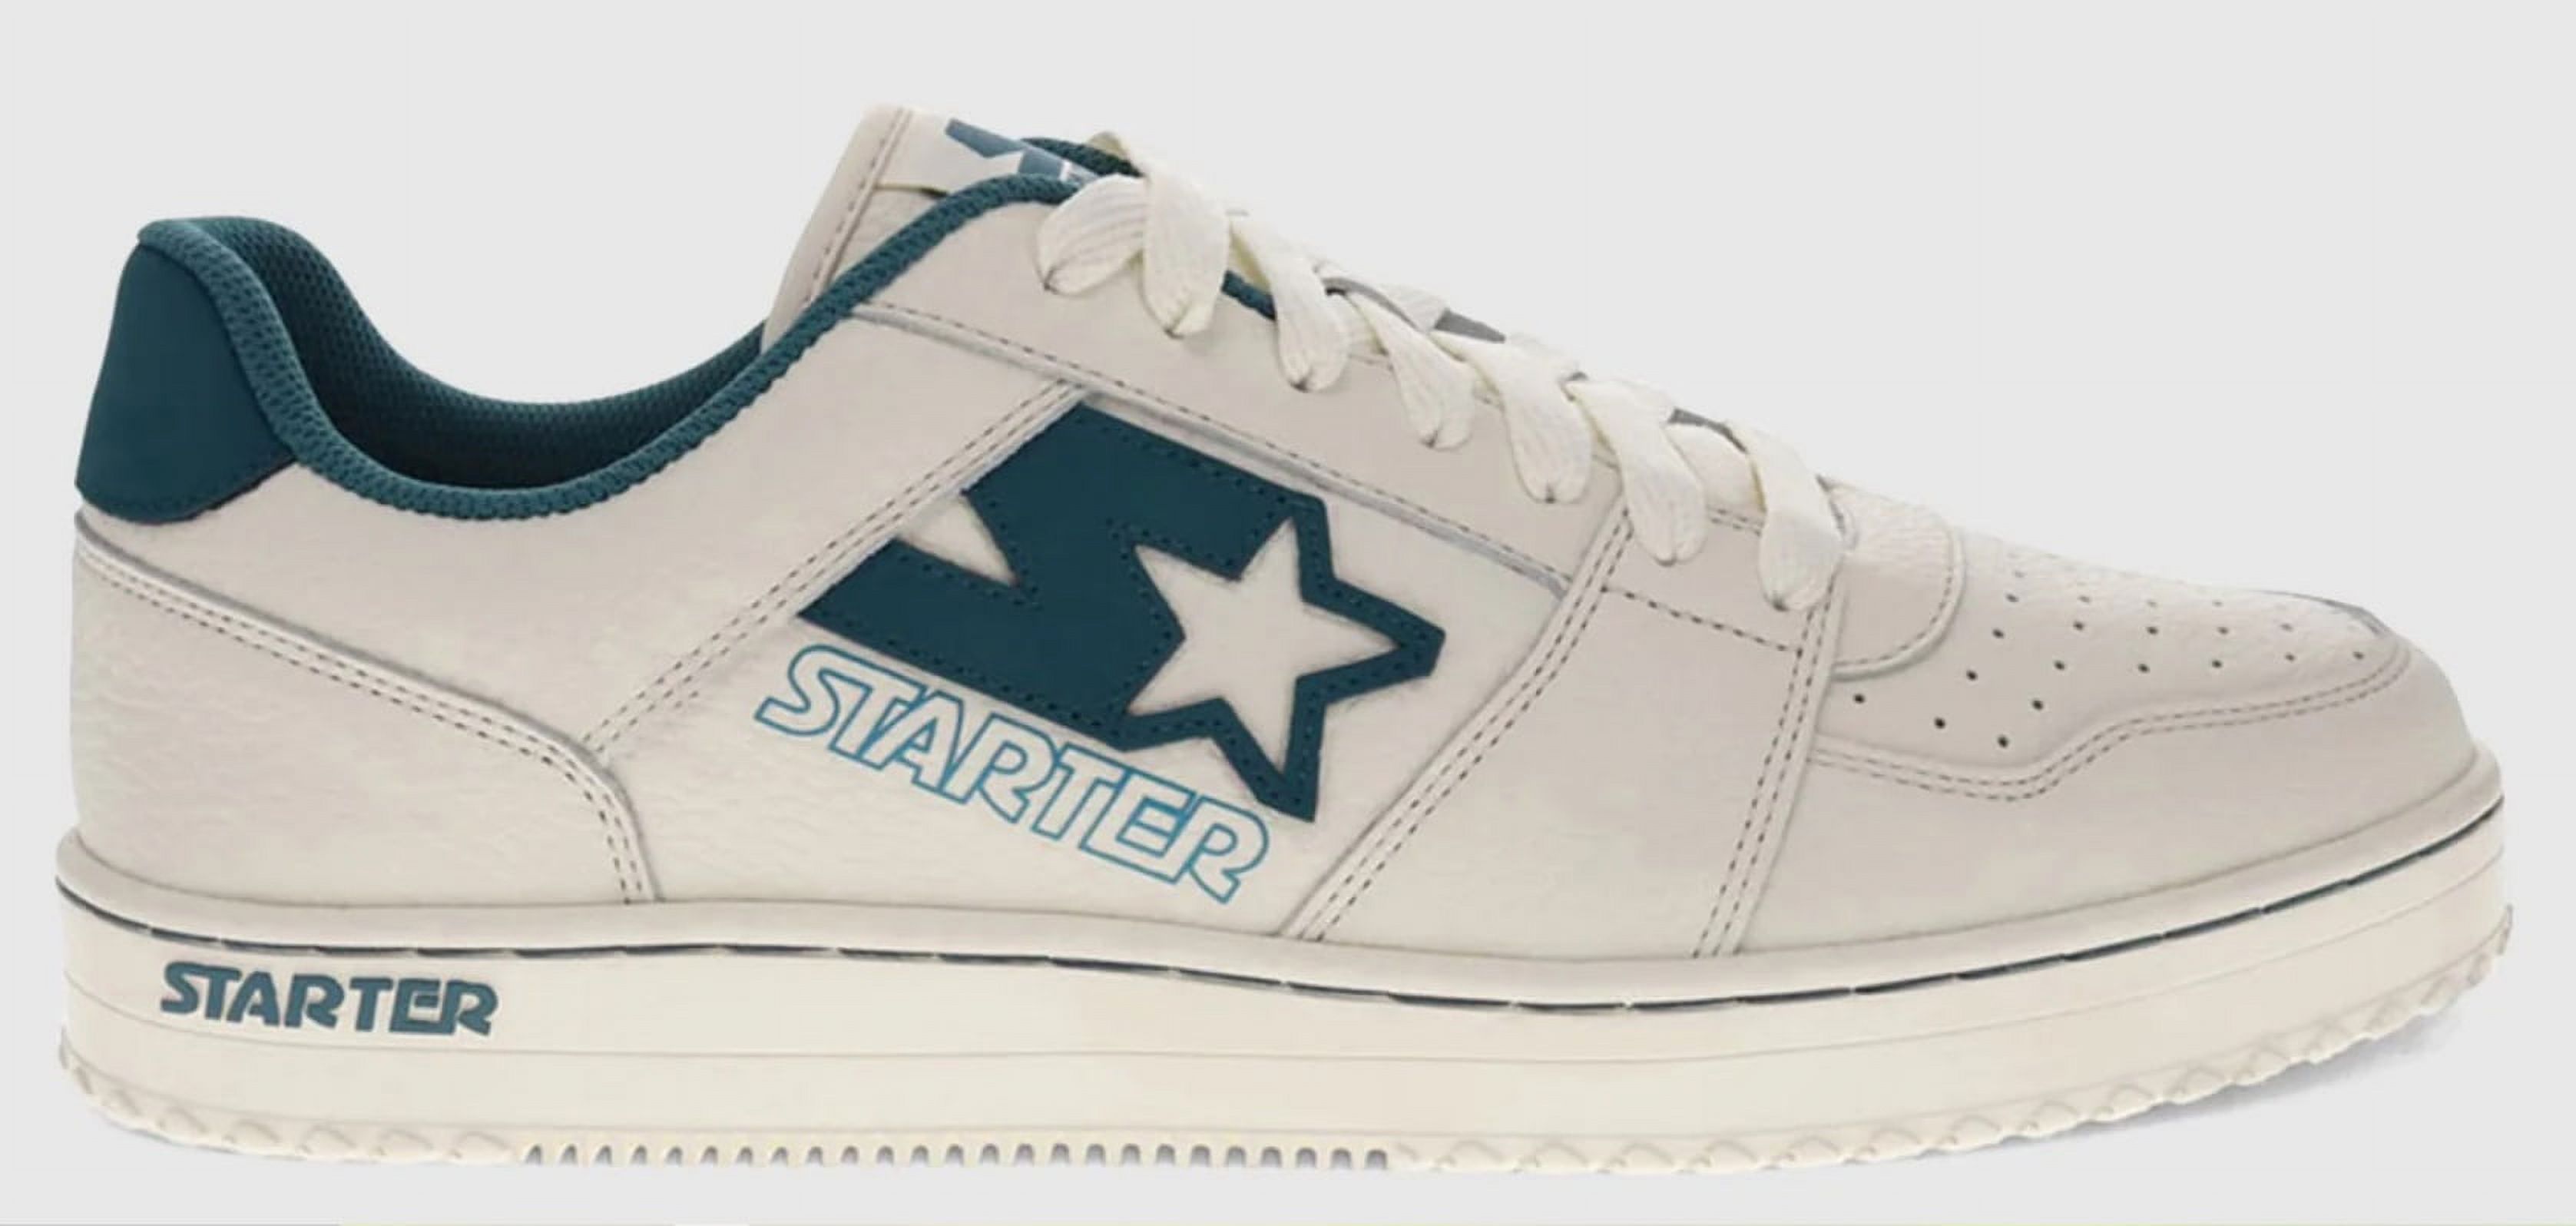 Starter Mens LFS 1 Sneaker, Adult, Off White/Teal, 9 M US - image 1 of 1